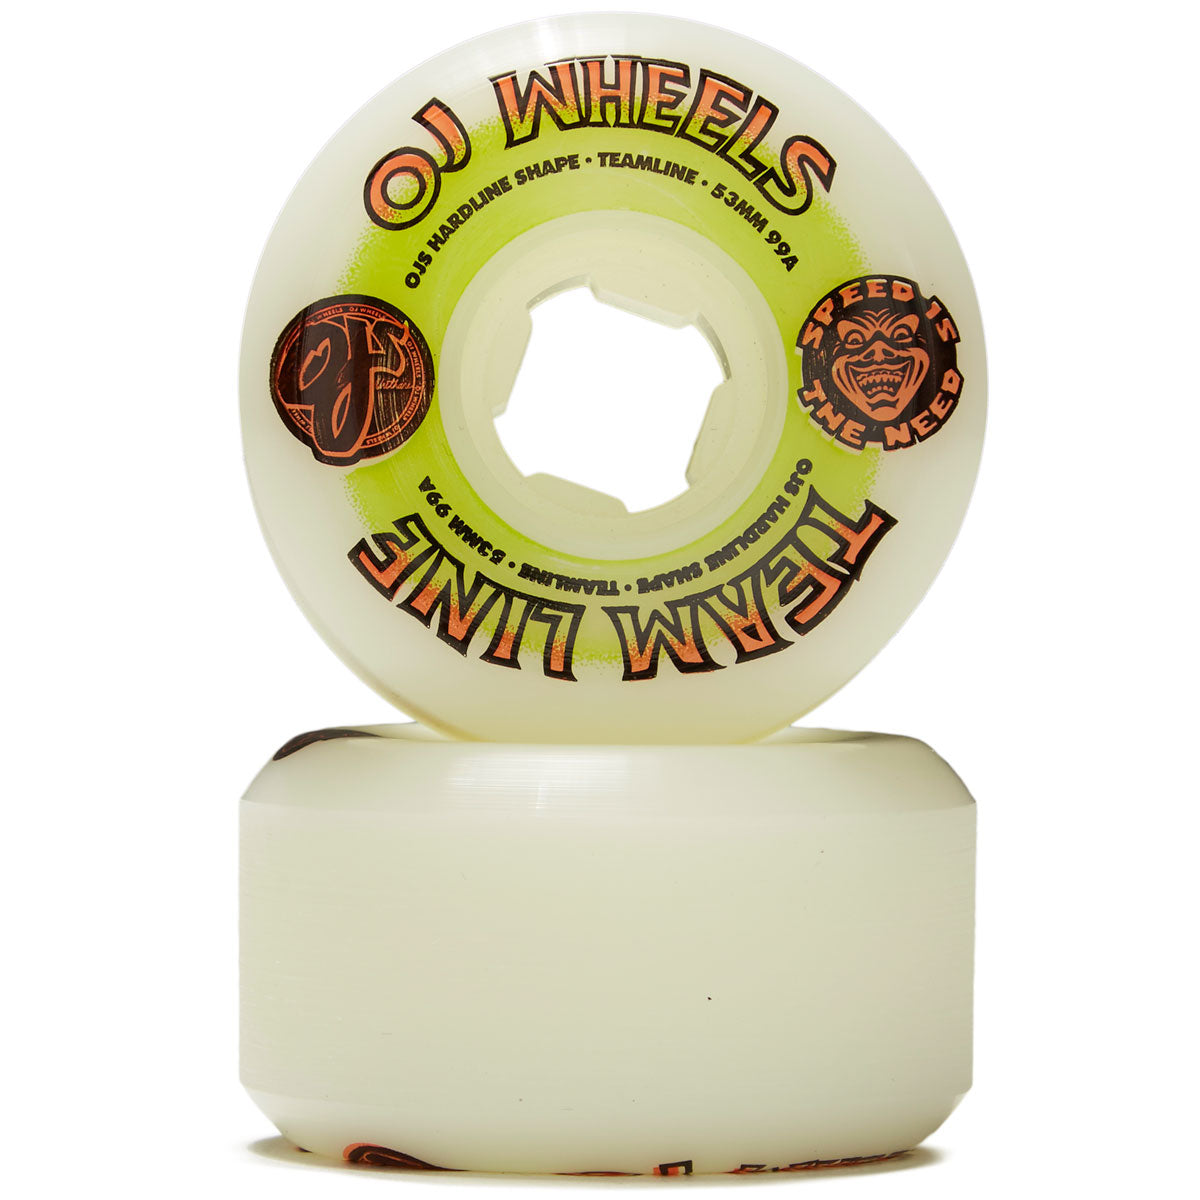 OJ Team Line Original Nomads 99a Skateboard Wheels - White/Green/Orange - 53mm image 2